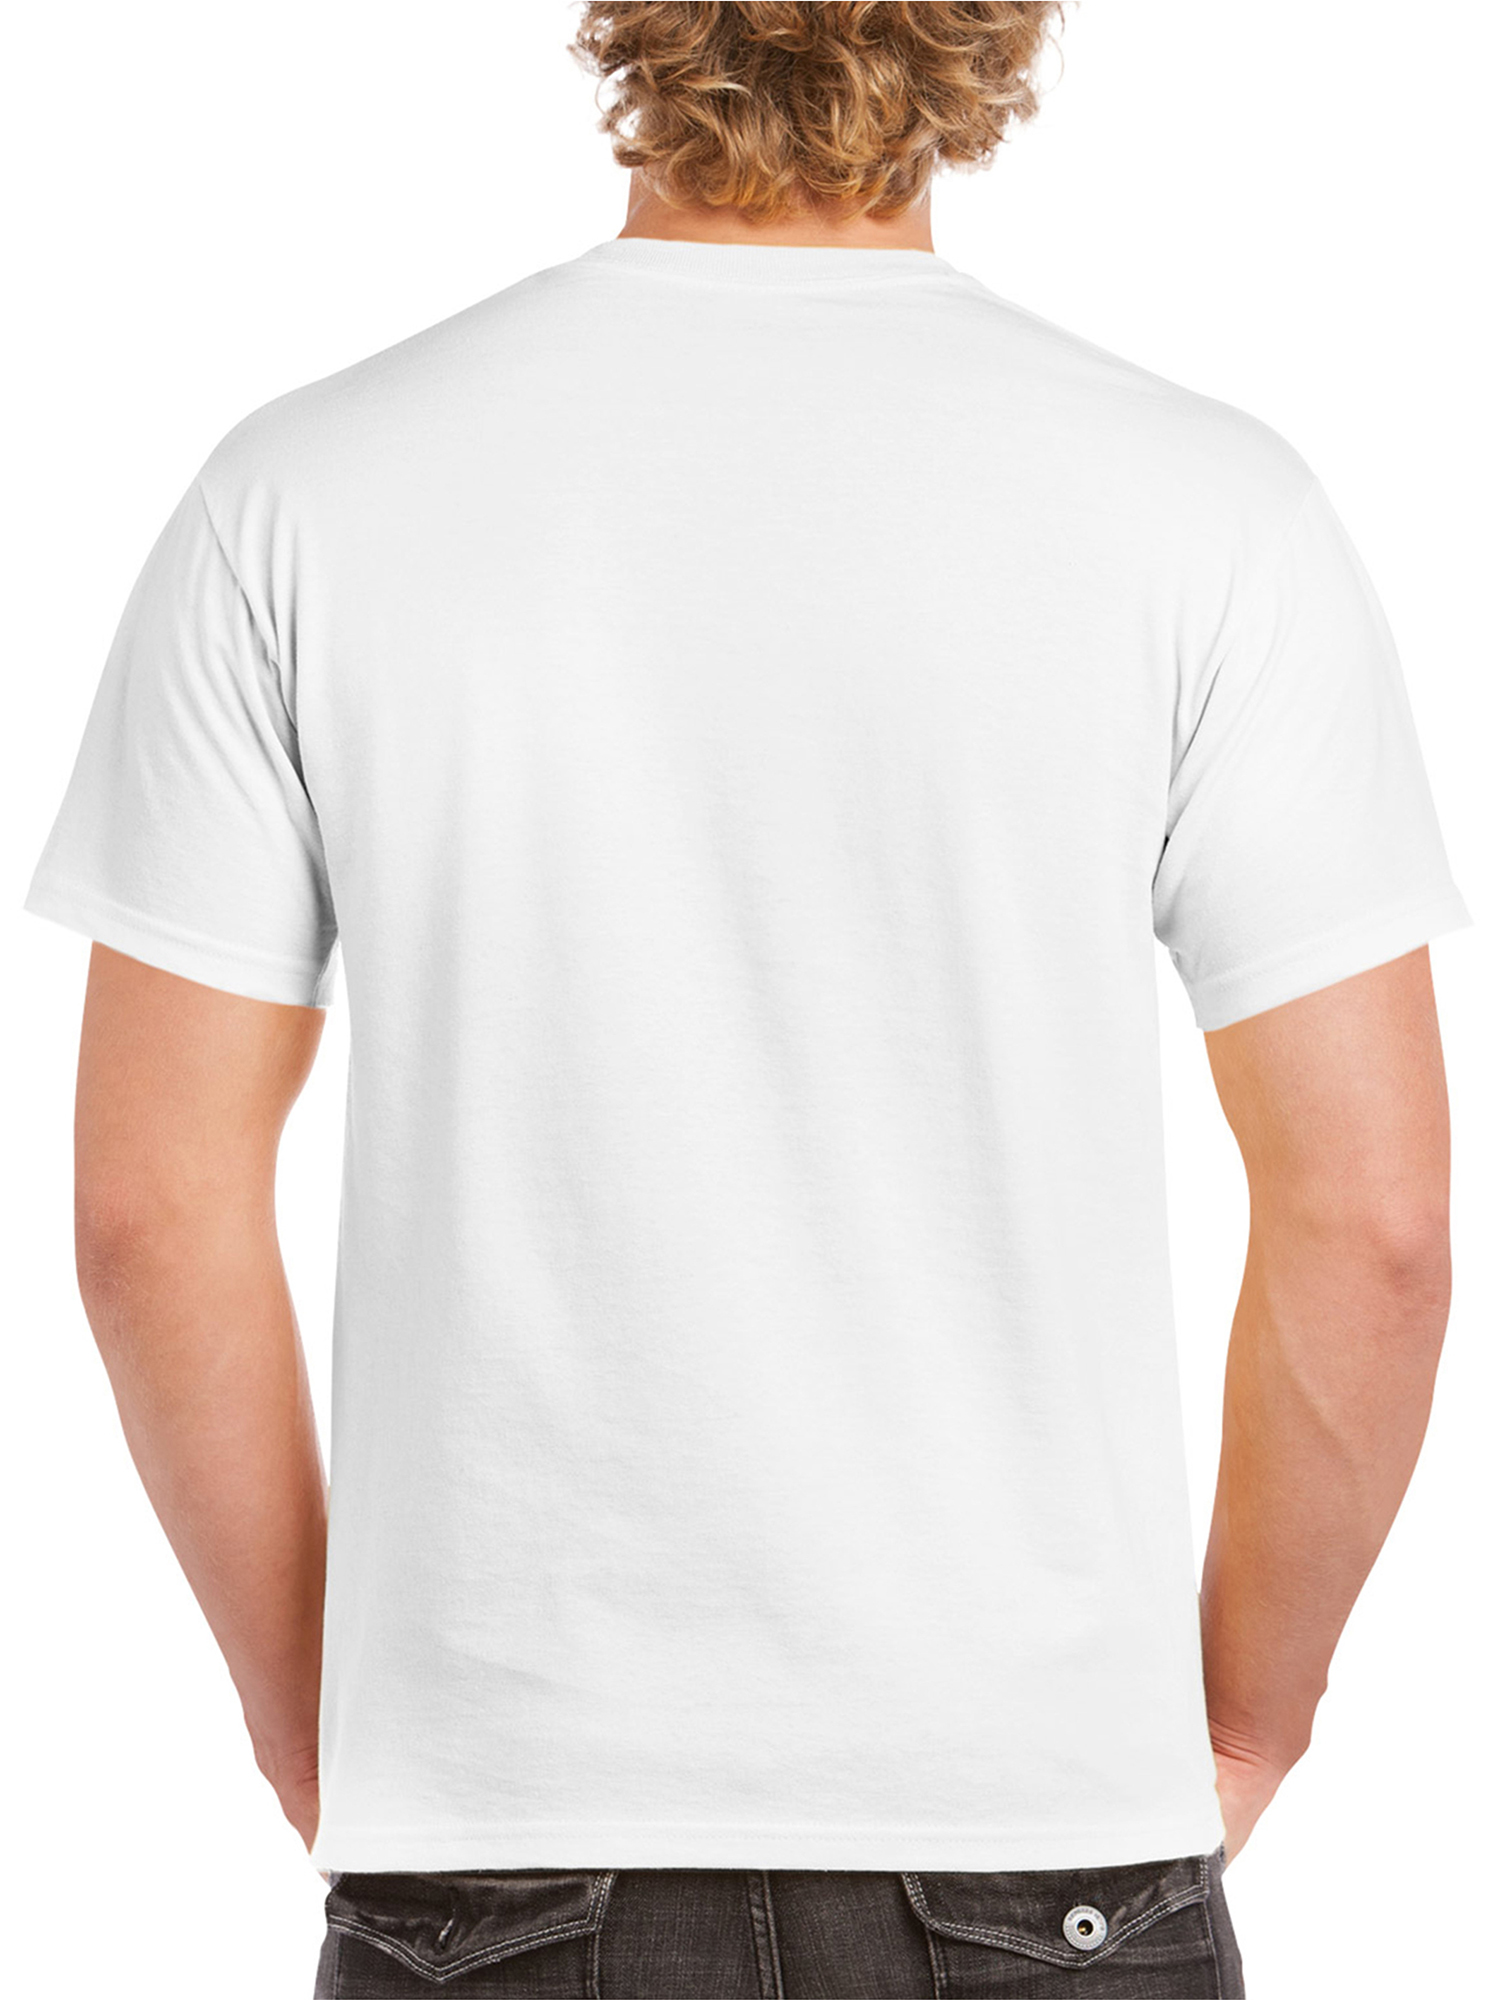 Gildan Men Cotton Short Sleeve White Crew T-Shirt, 4-Pack, Large - image 5 of 9